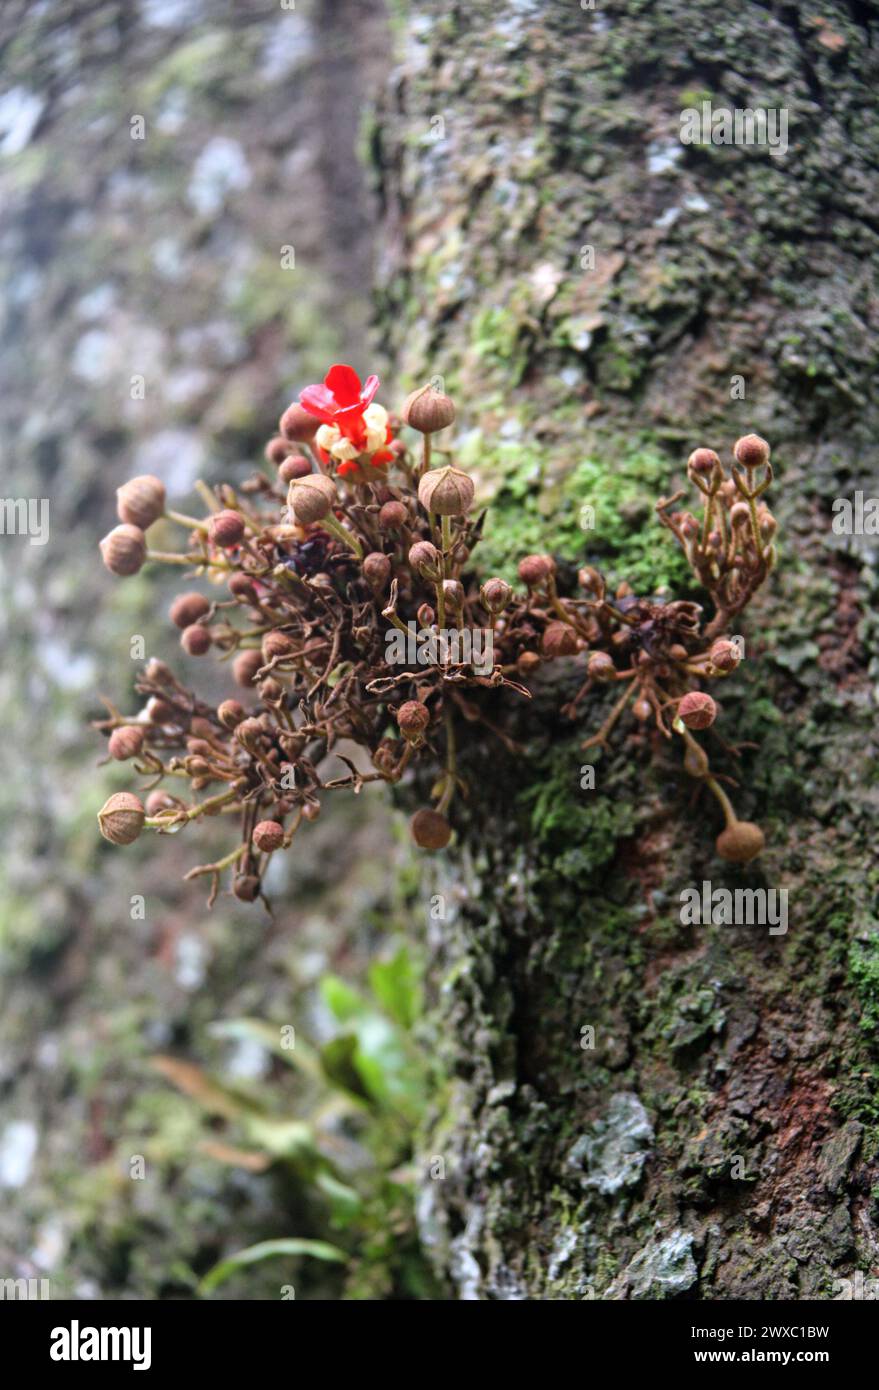 Theobroma simiarum,Theobromateae, Malvaceae. Costa Rica. Theobroma is a genus of flowering plants in the mallow family, Malvaceae. Stock Photo